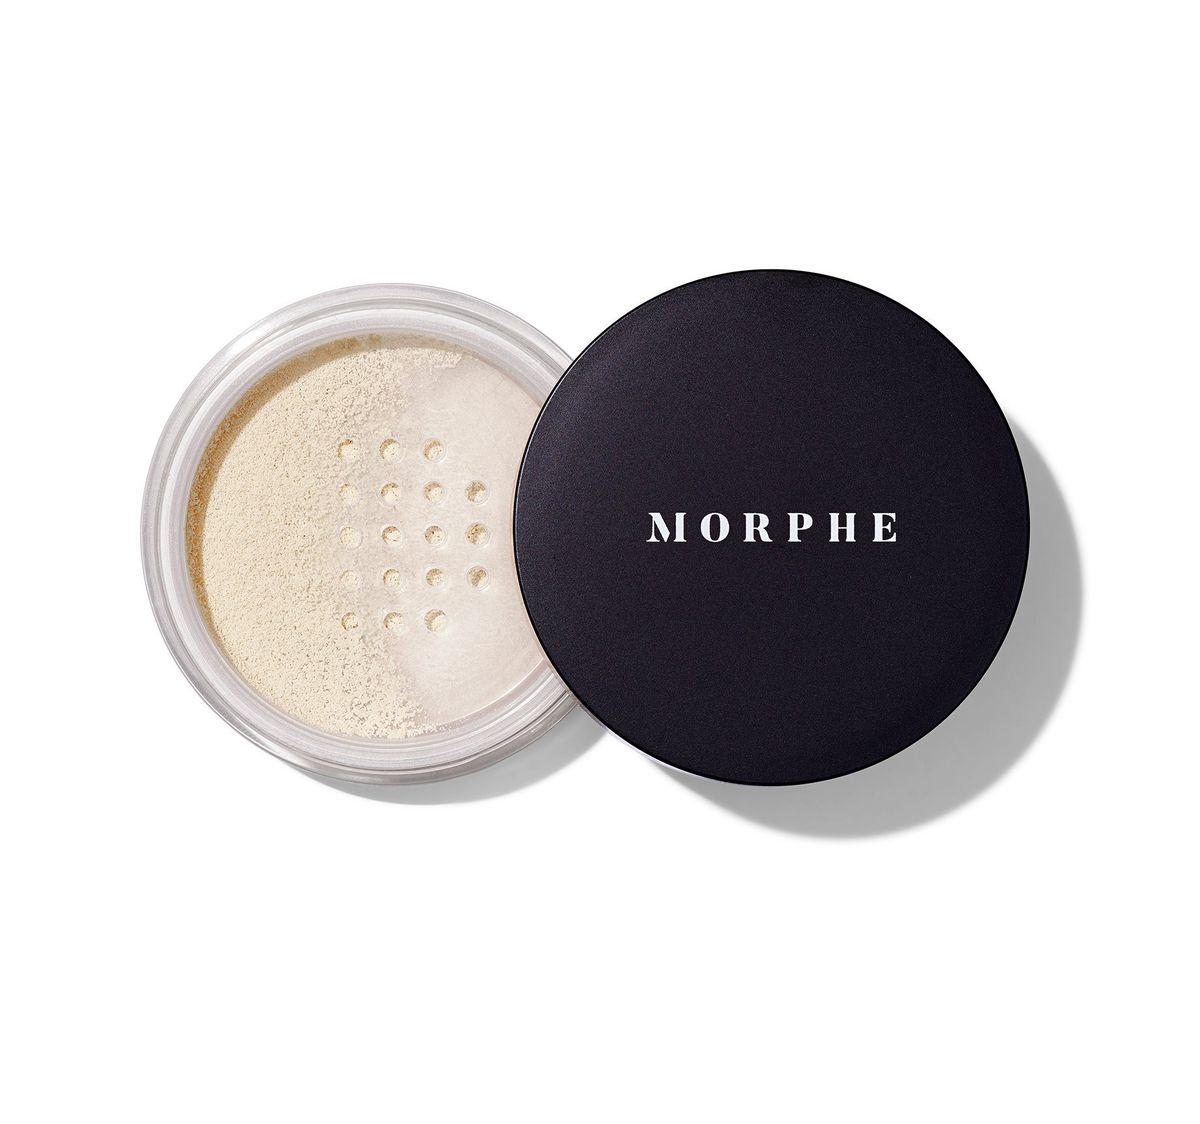 Morphe Powder